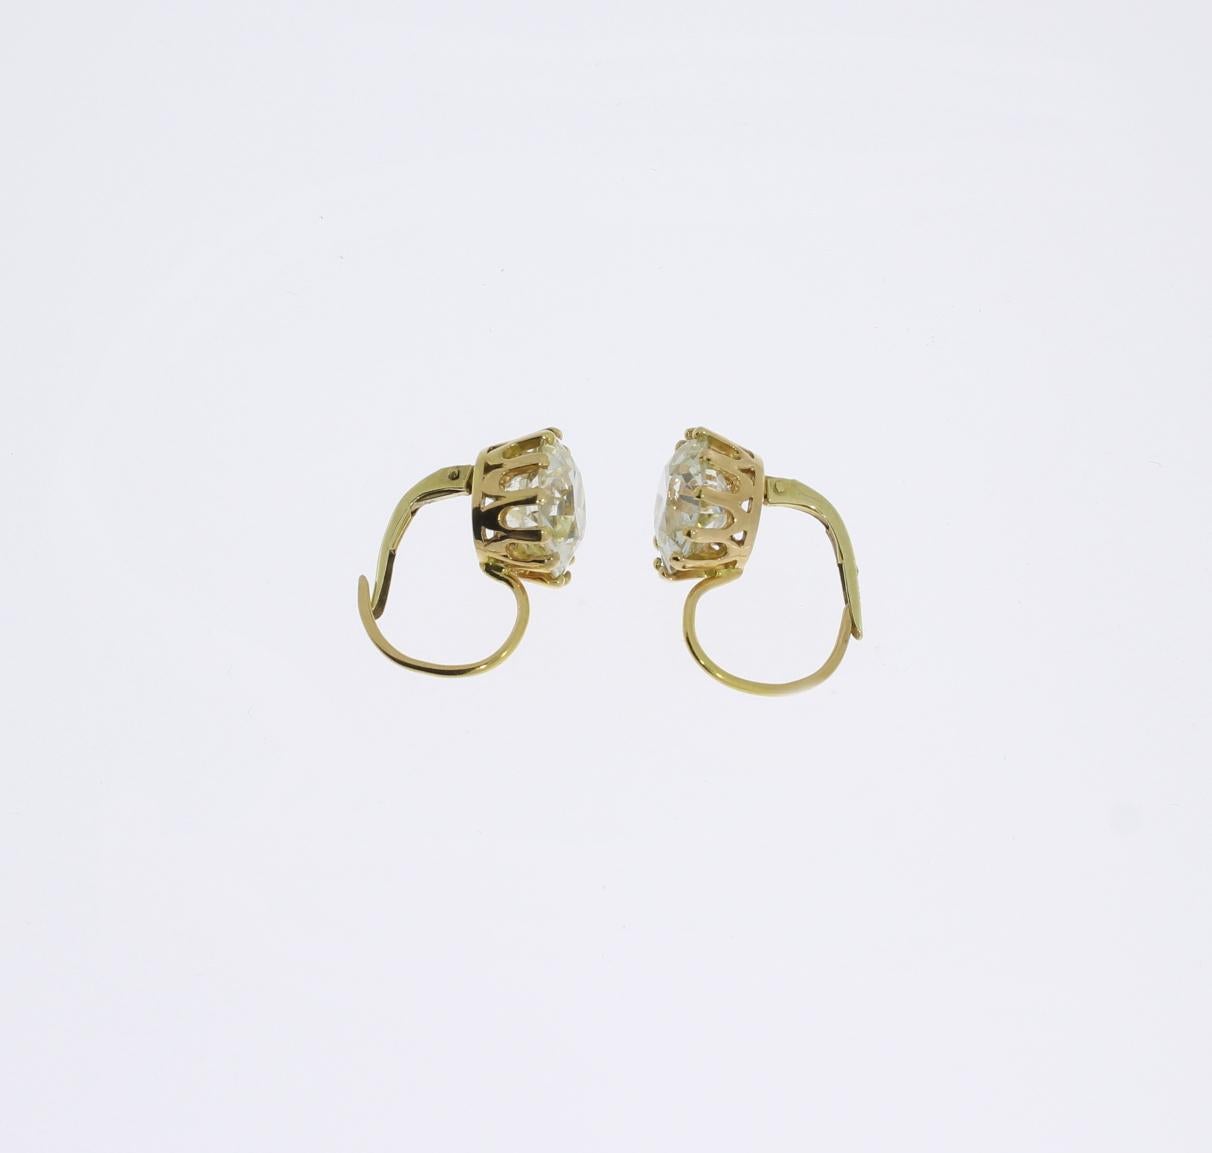 Edwardian Pair of Diamond Stud Earrings in 18 Karat Yellow Gold